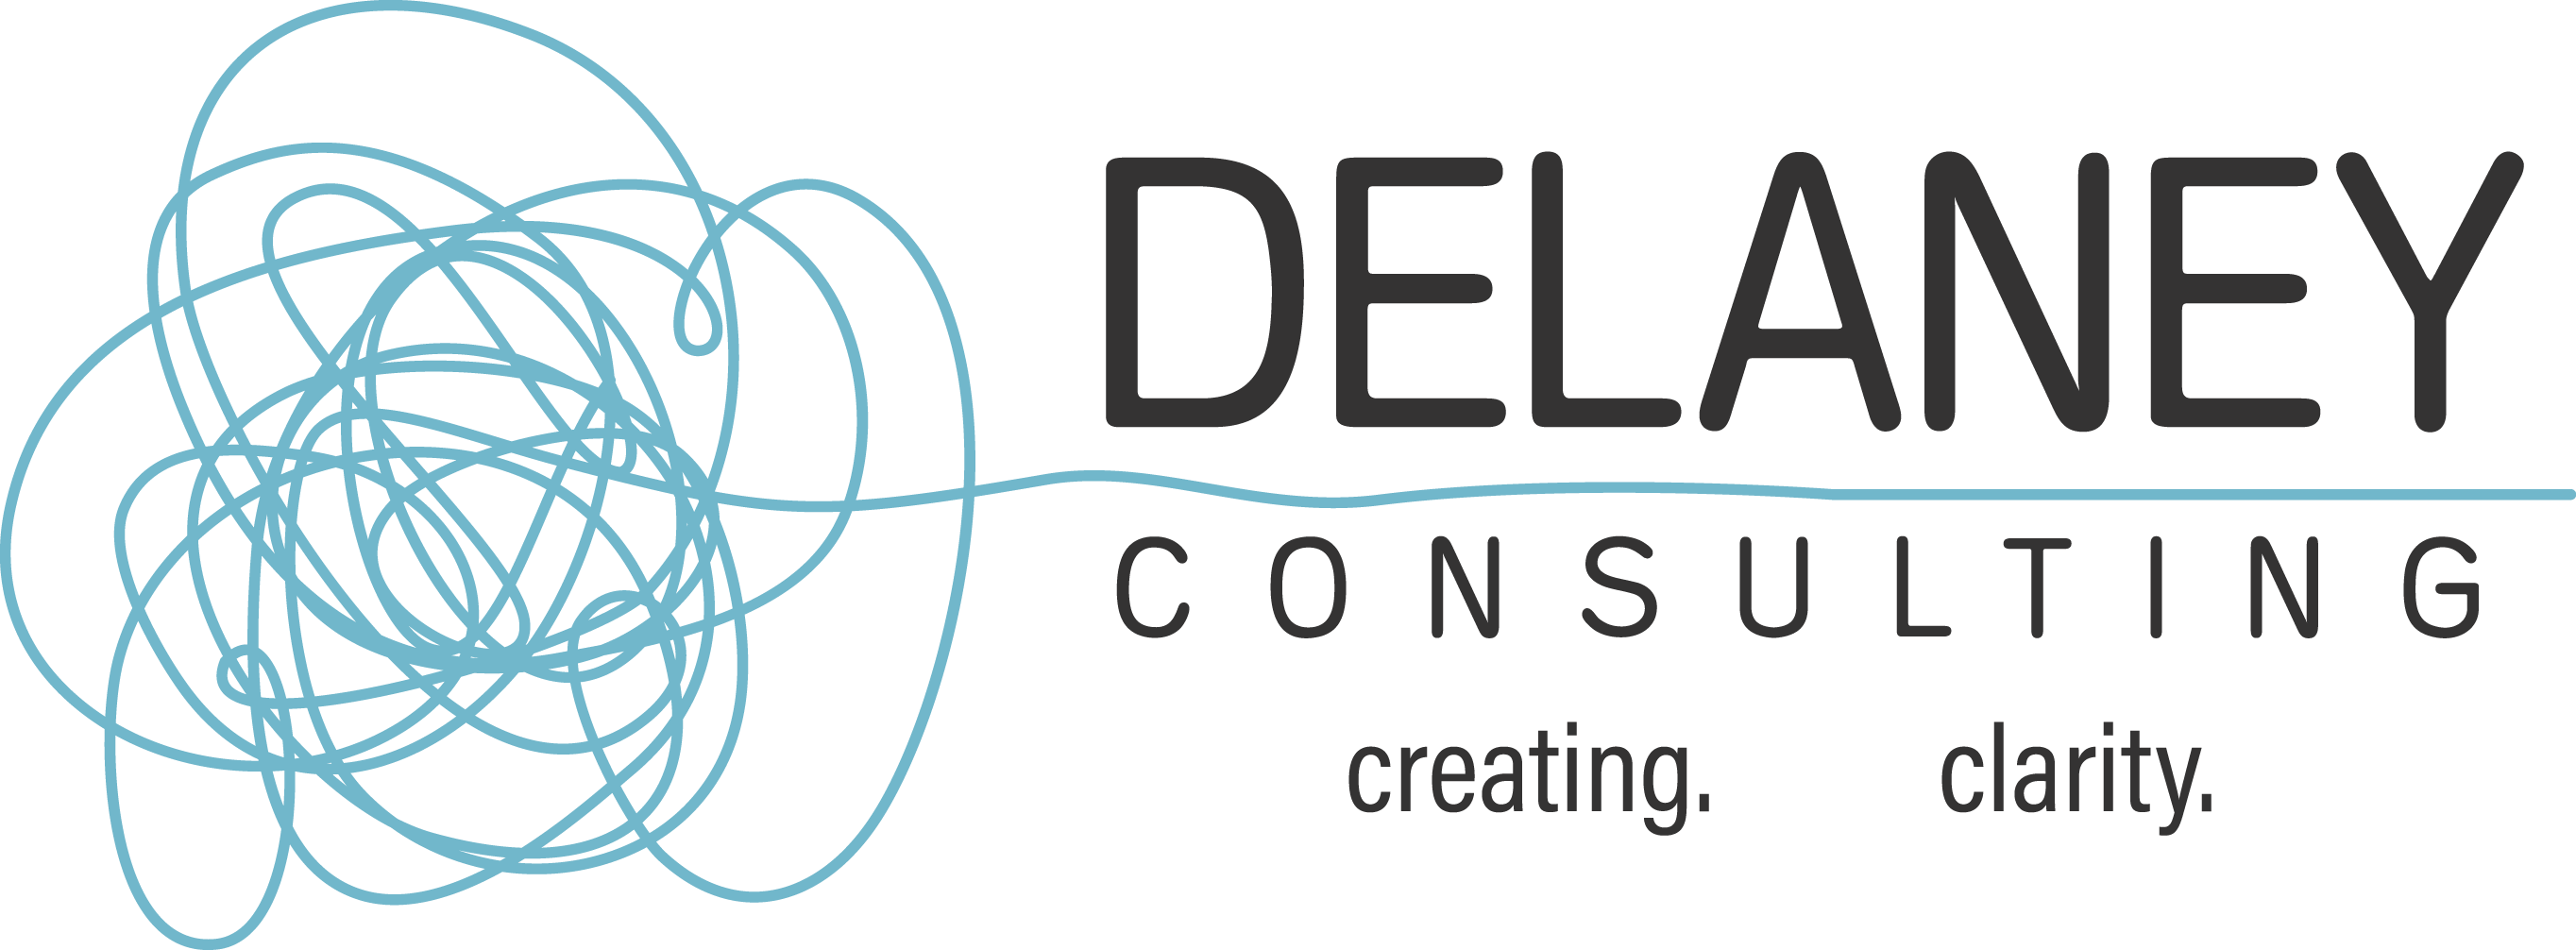 Delaney Consulting logo